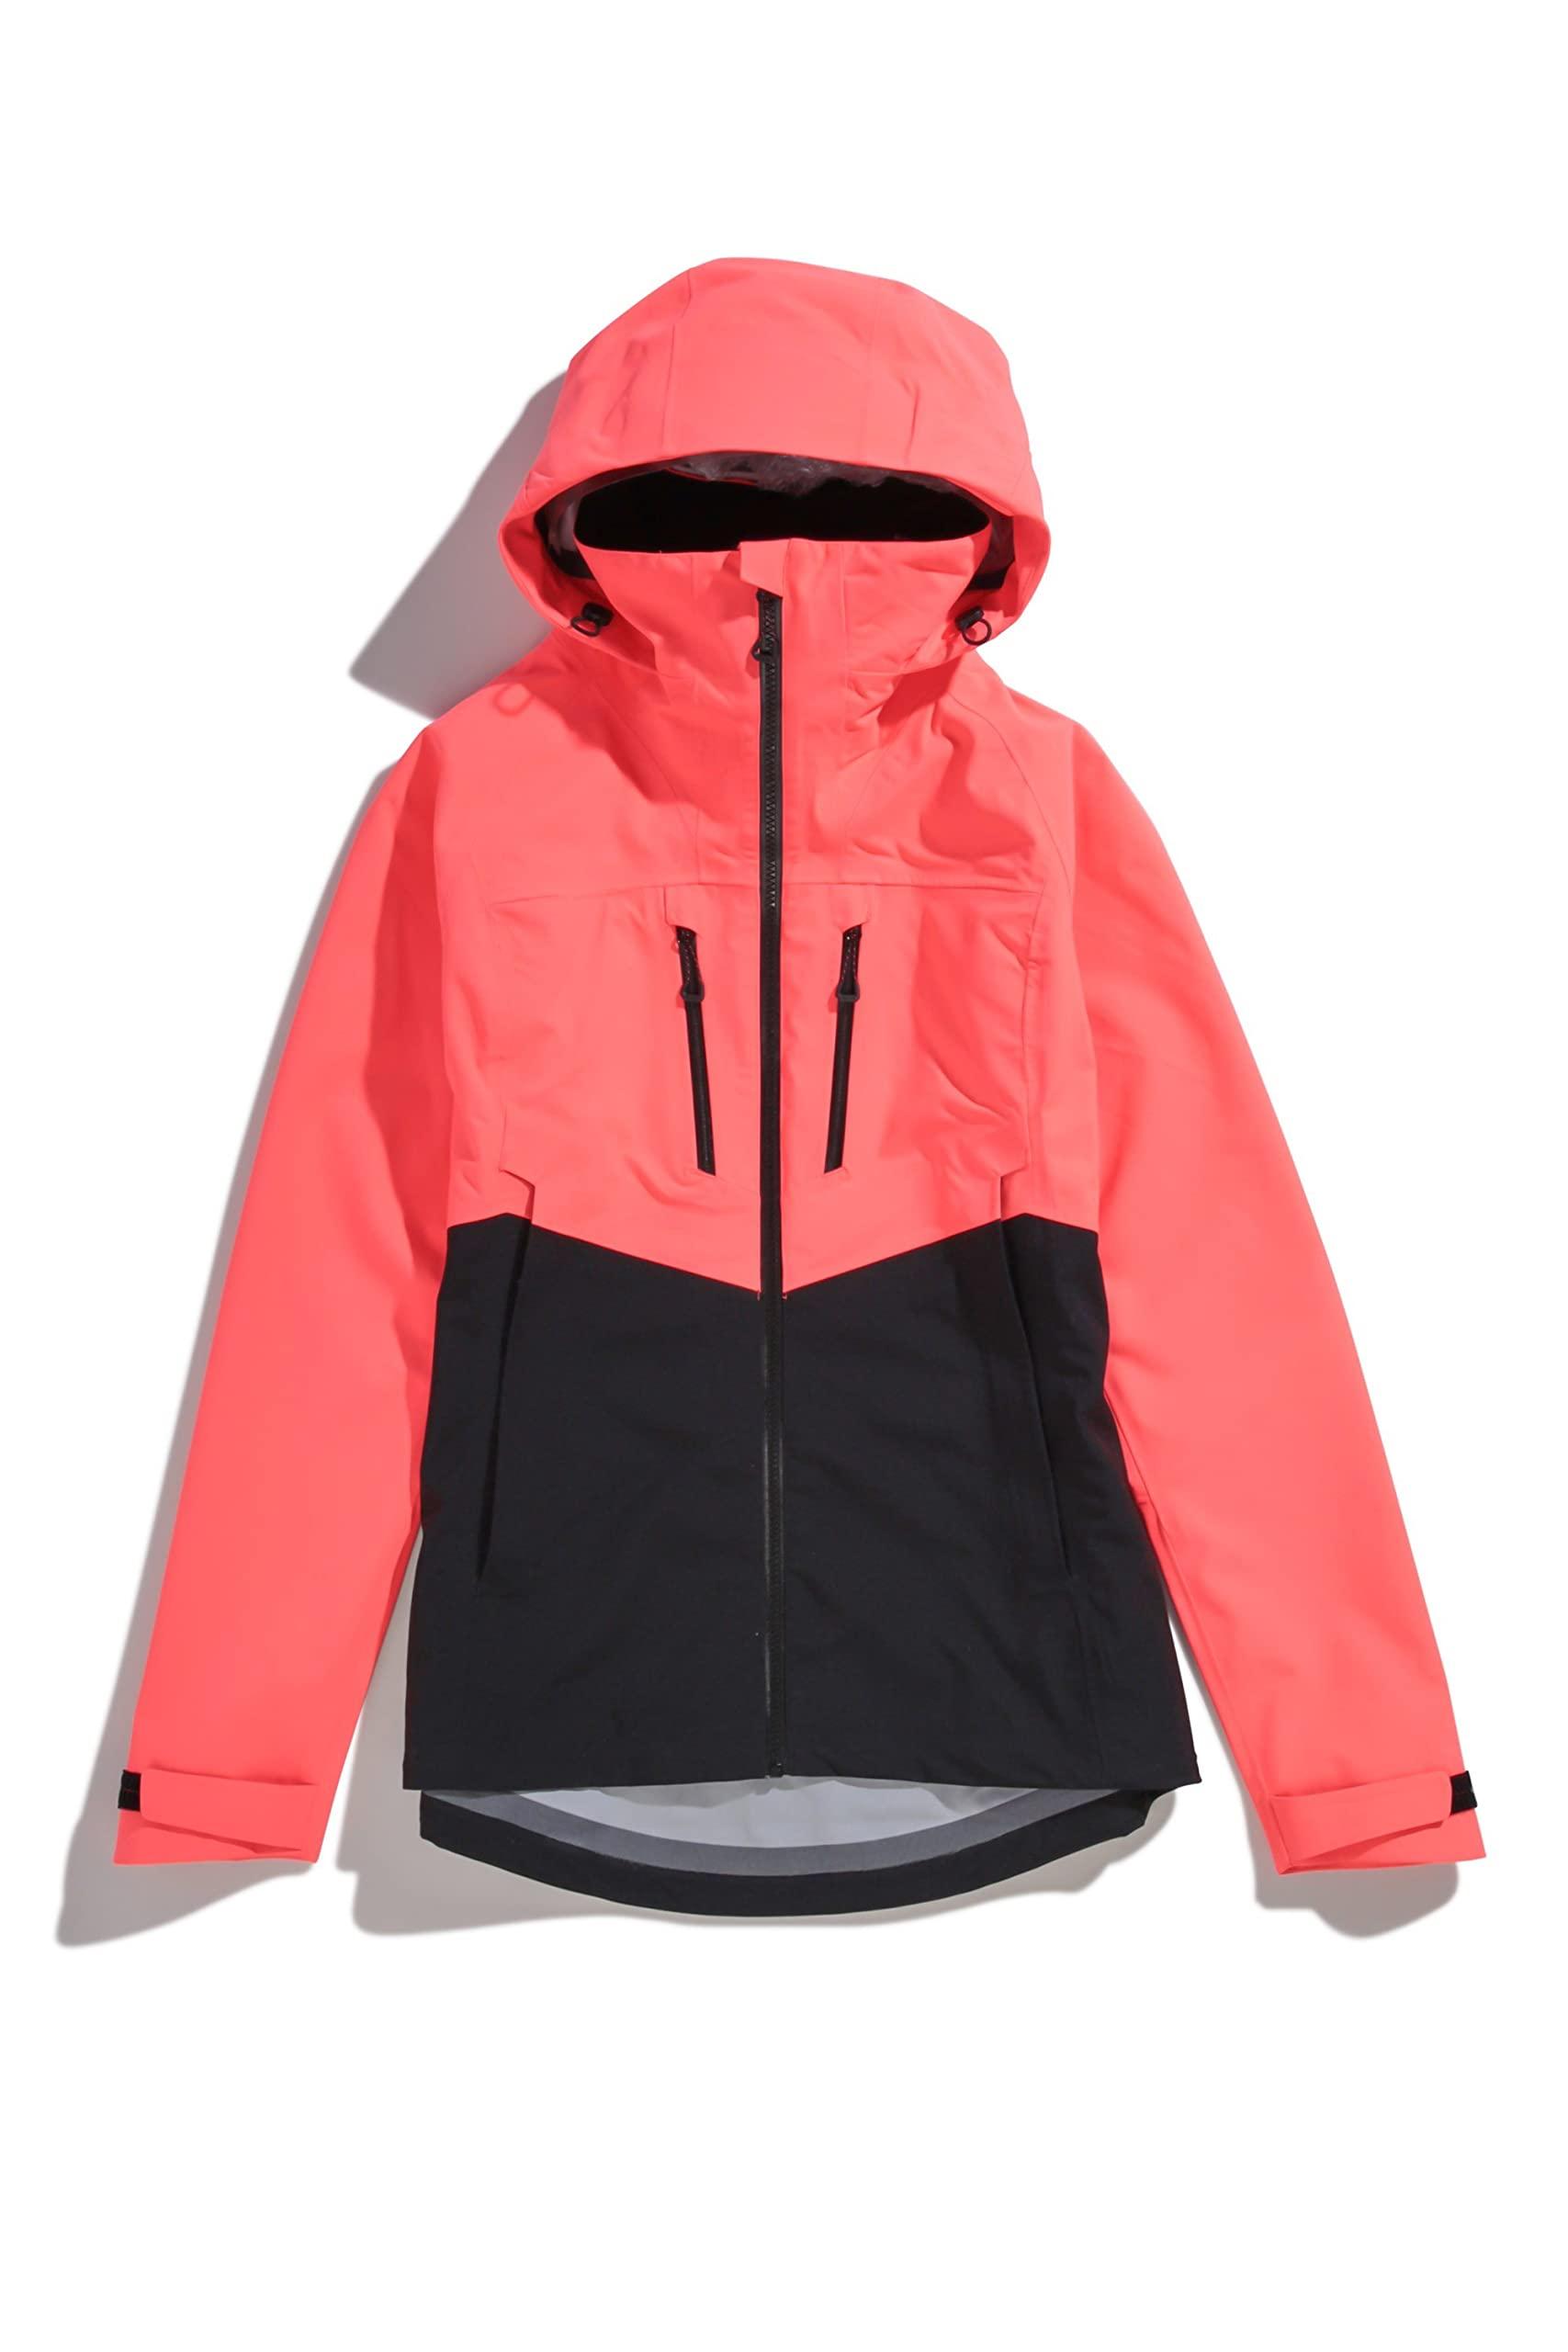 Mountain Warehouse Himalaya Ultra Womens Waterproof Jacket - 3 Layer,  20,000mm, Breathable, Taped Seams Ladies Raincoat - Best in Pink | Lyst UK